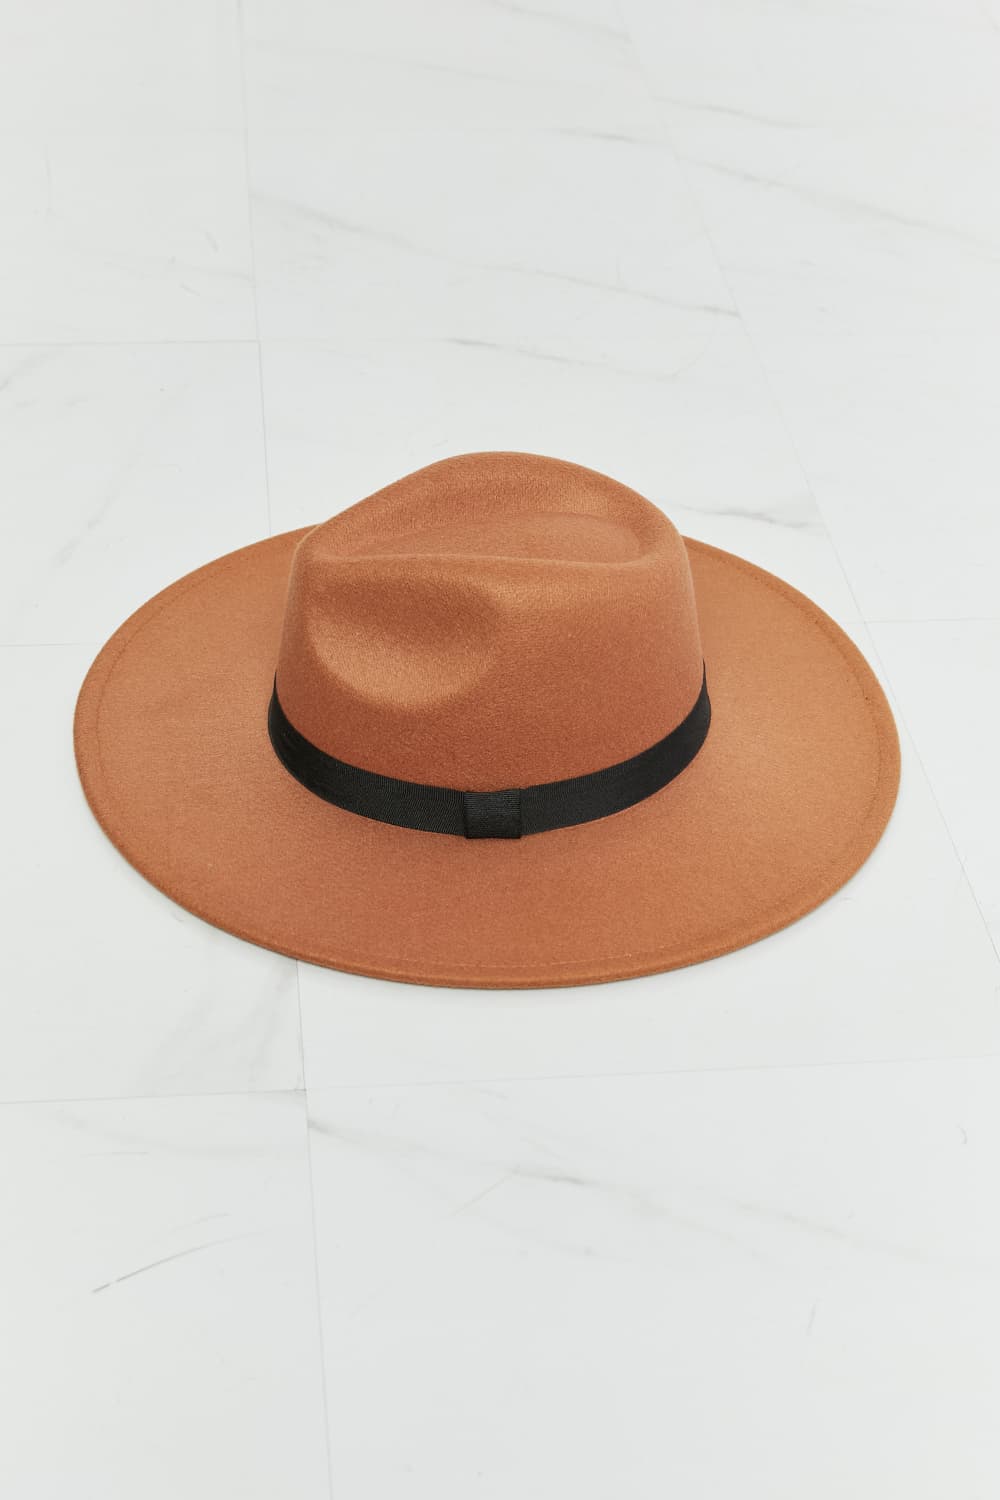 Fame Enjoy The Simple Things Fedora Hat - The Fashion Unicorn